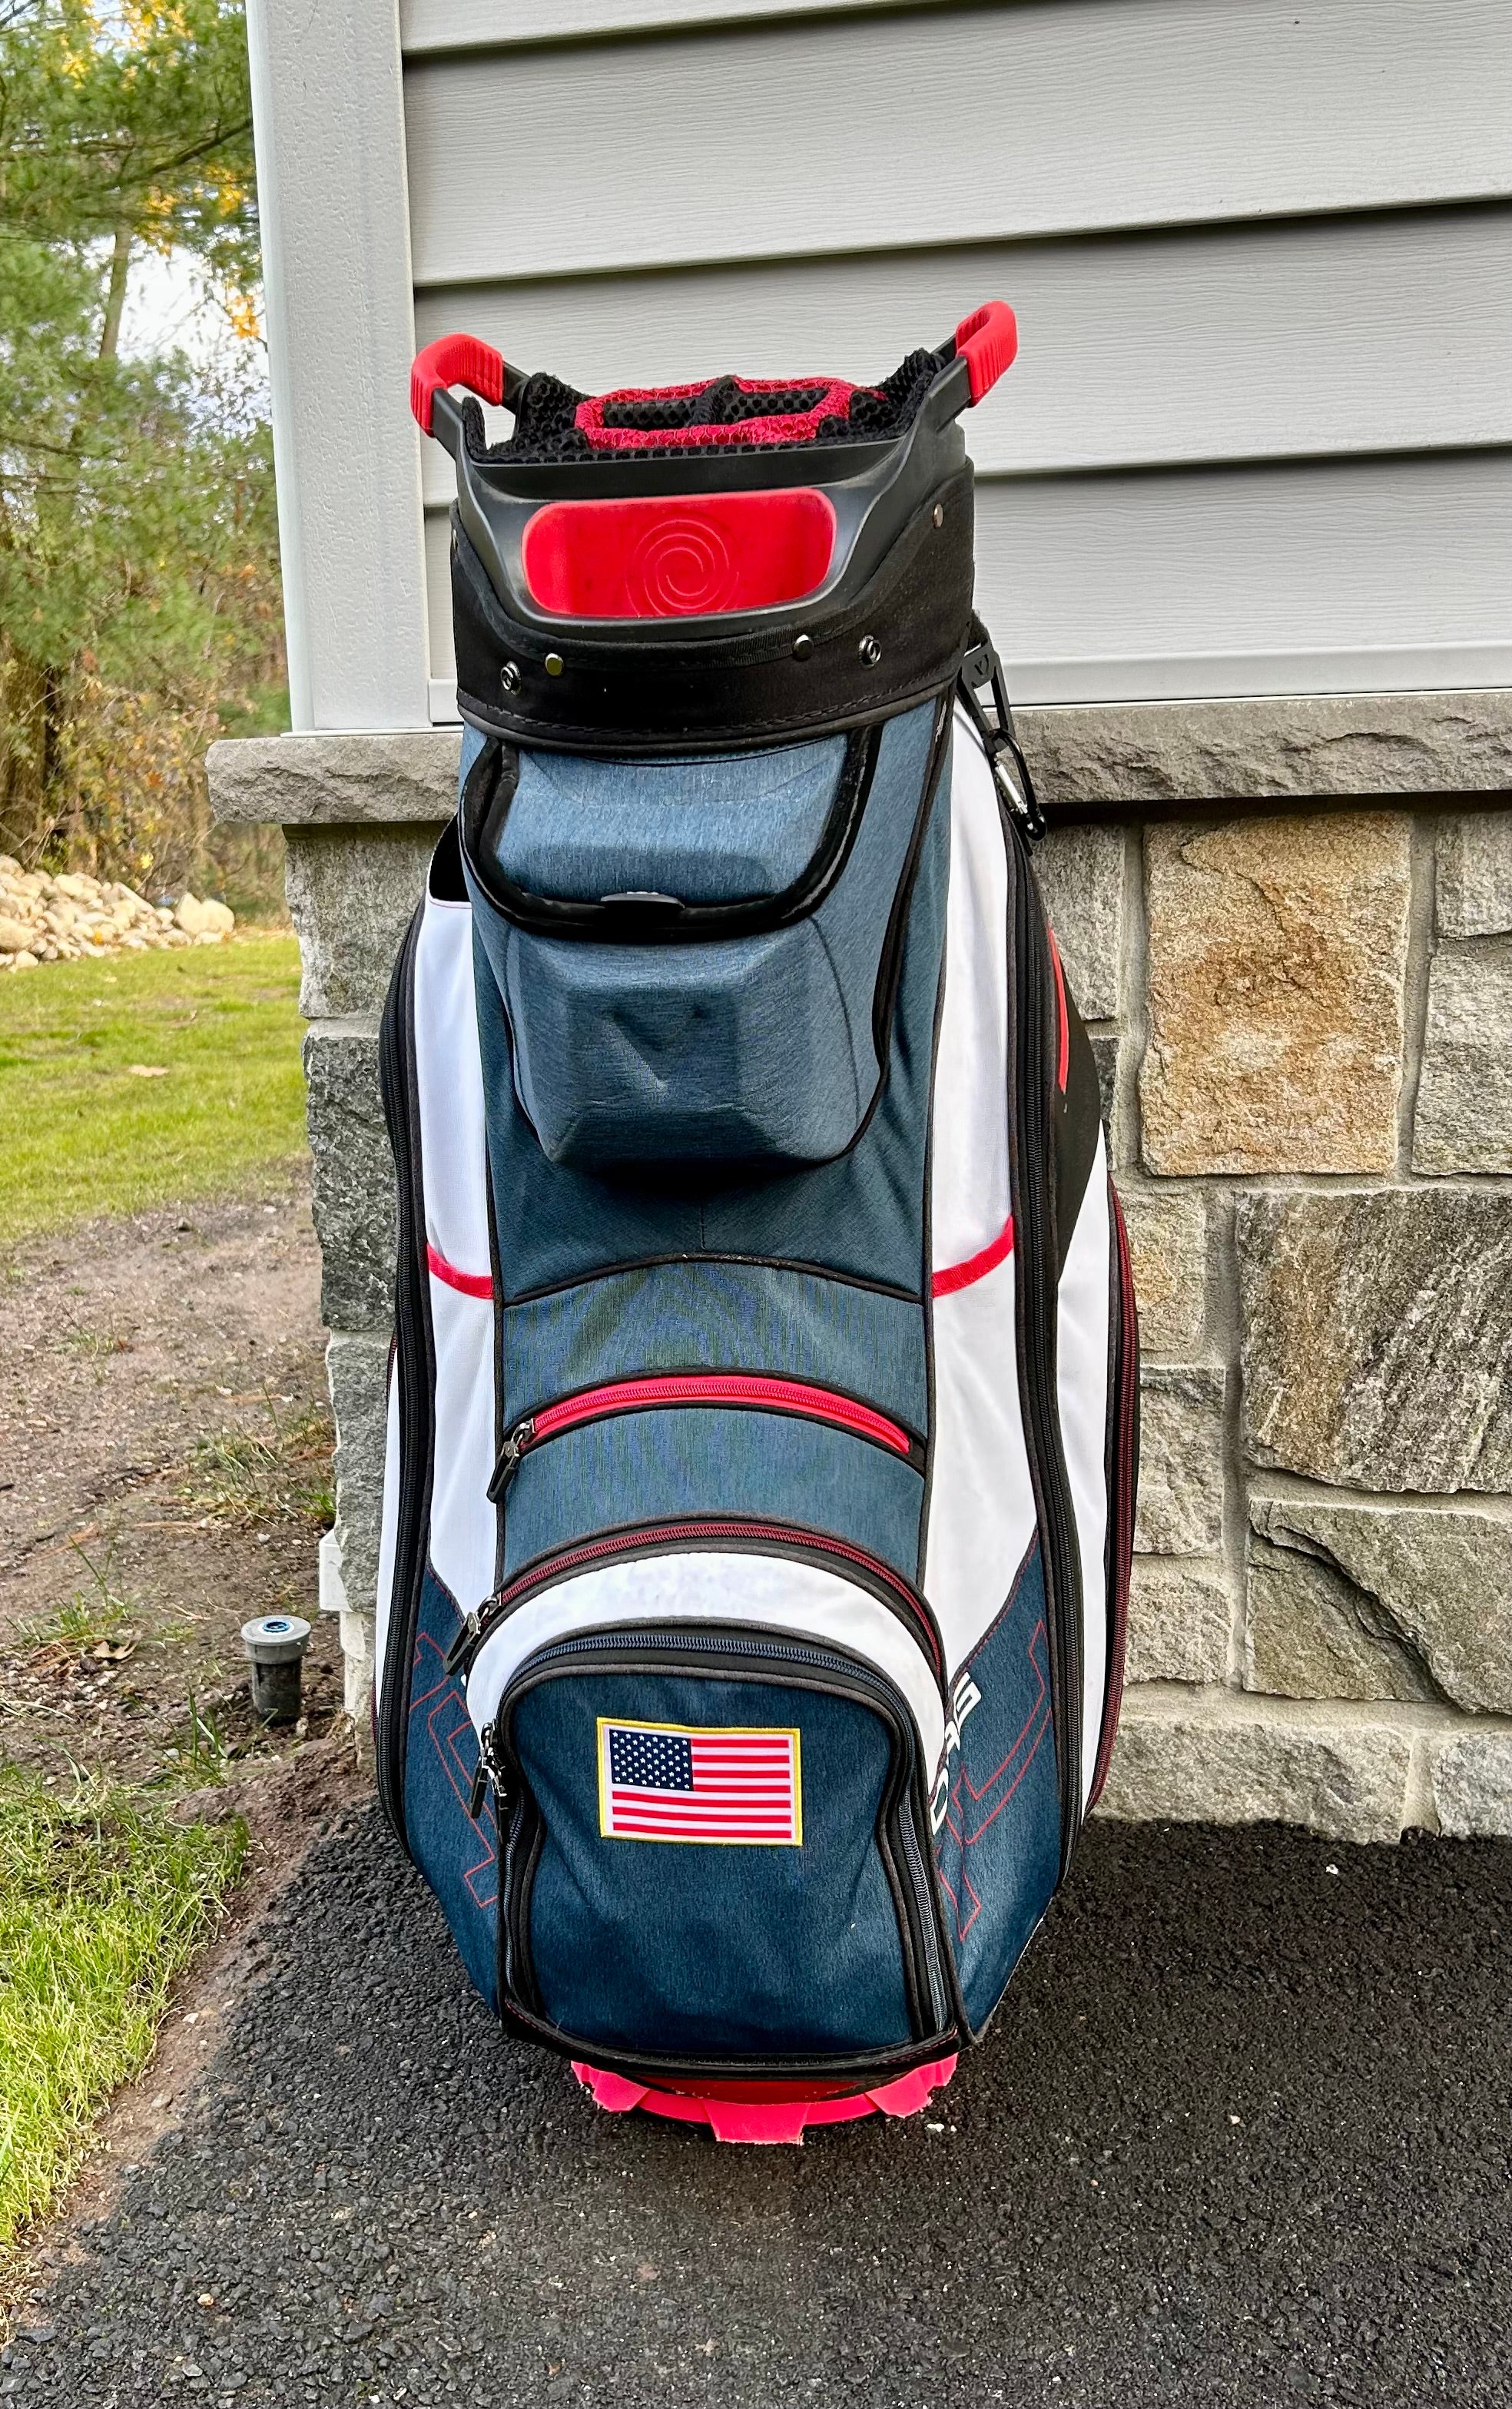 Golf Bag – THE-ECHELON